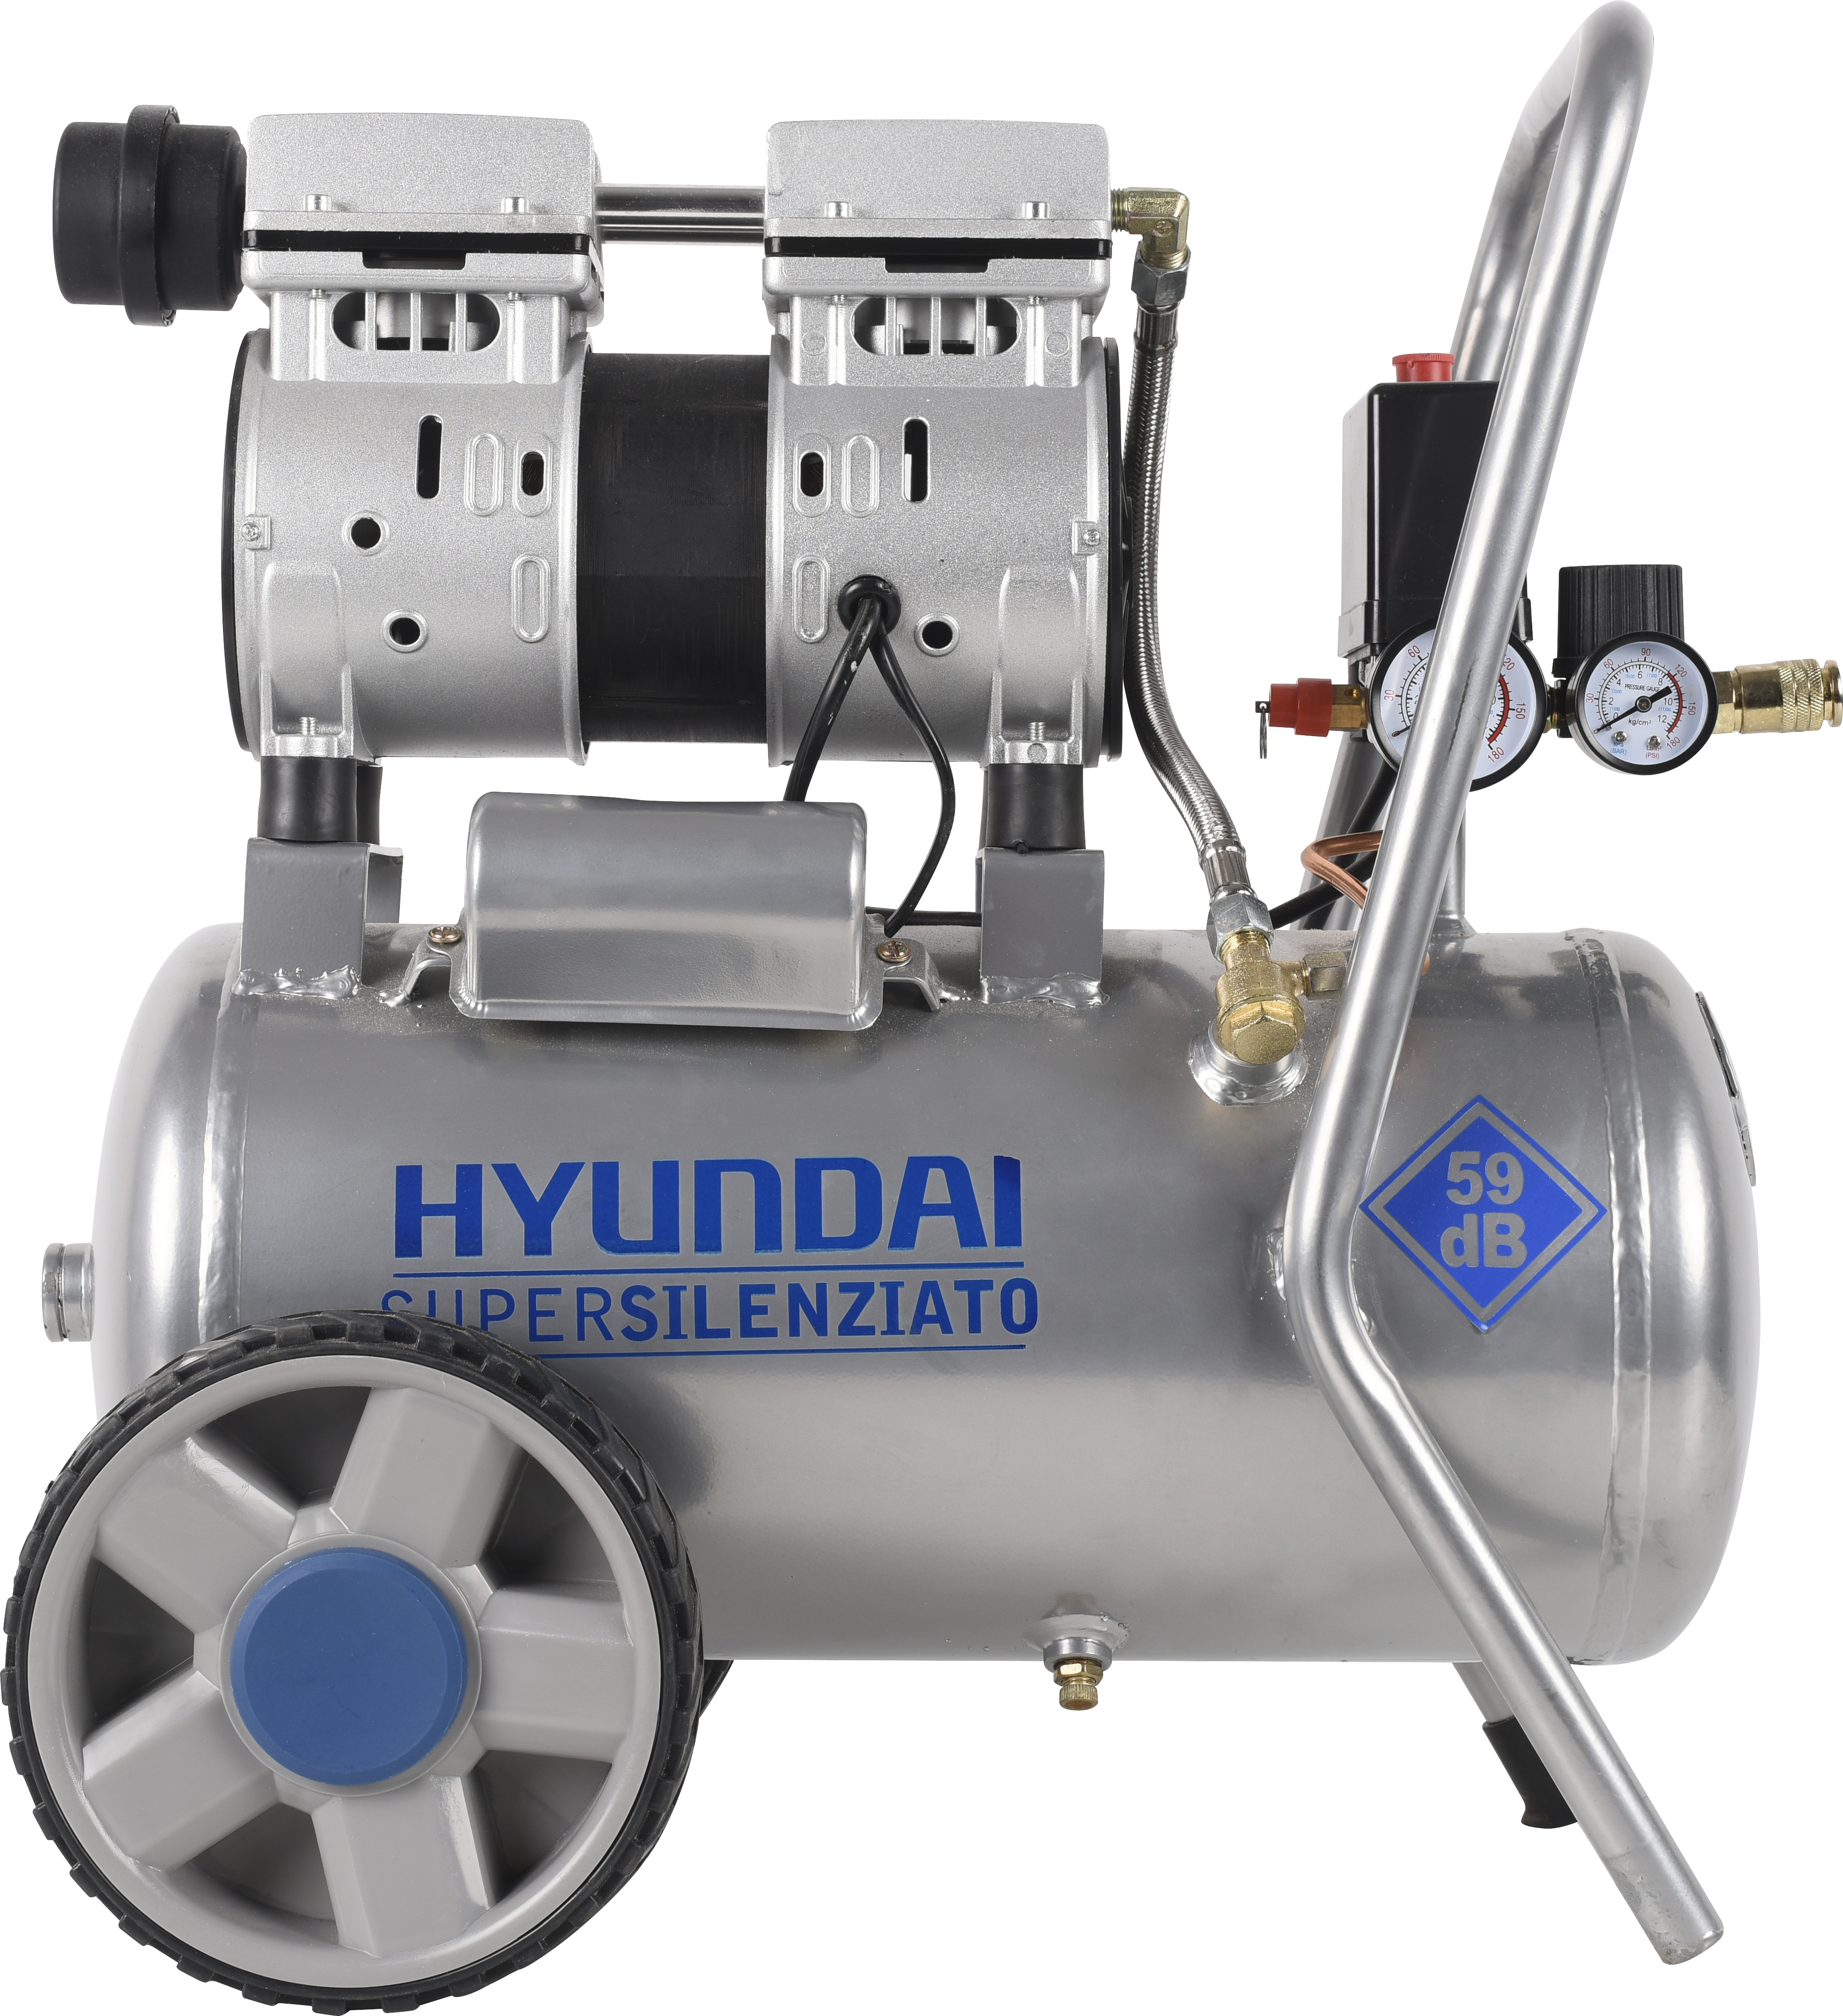 Compresor silencioso Hyundai HYAC24-1S – Intermaquinas